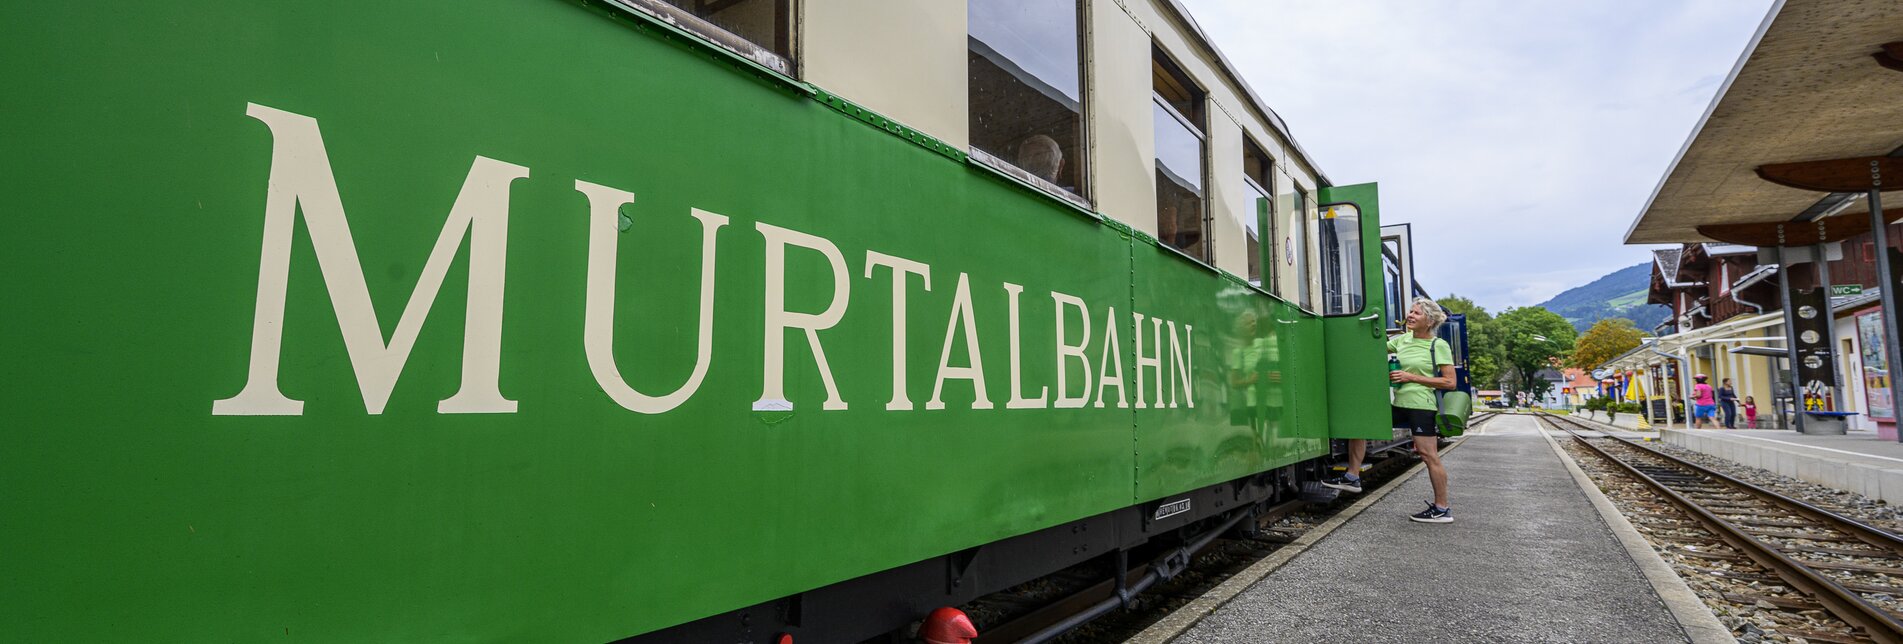 Boarding the train Murtalbahn | © Steiermark Tourismus | Pixelmaker